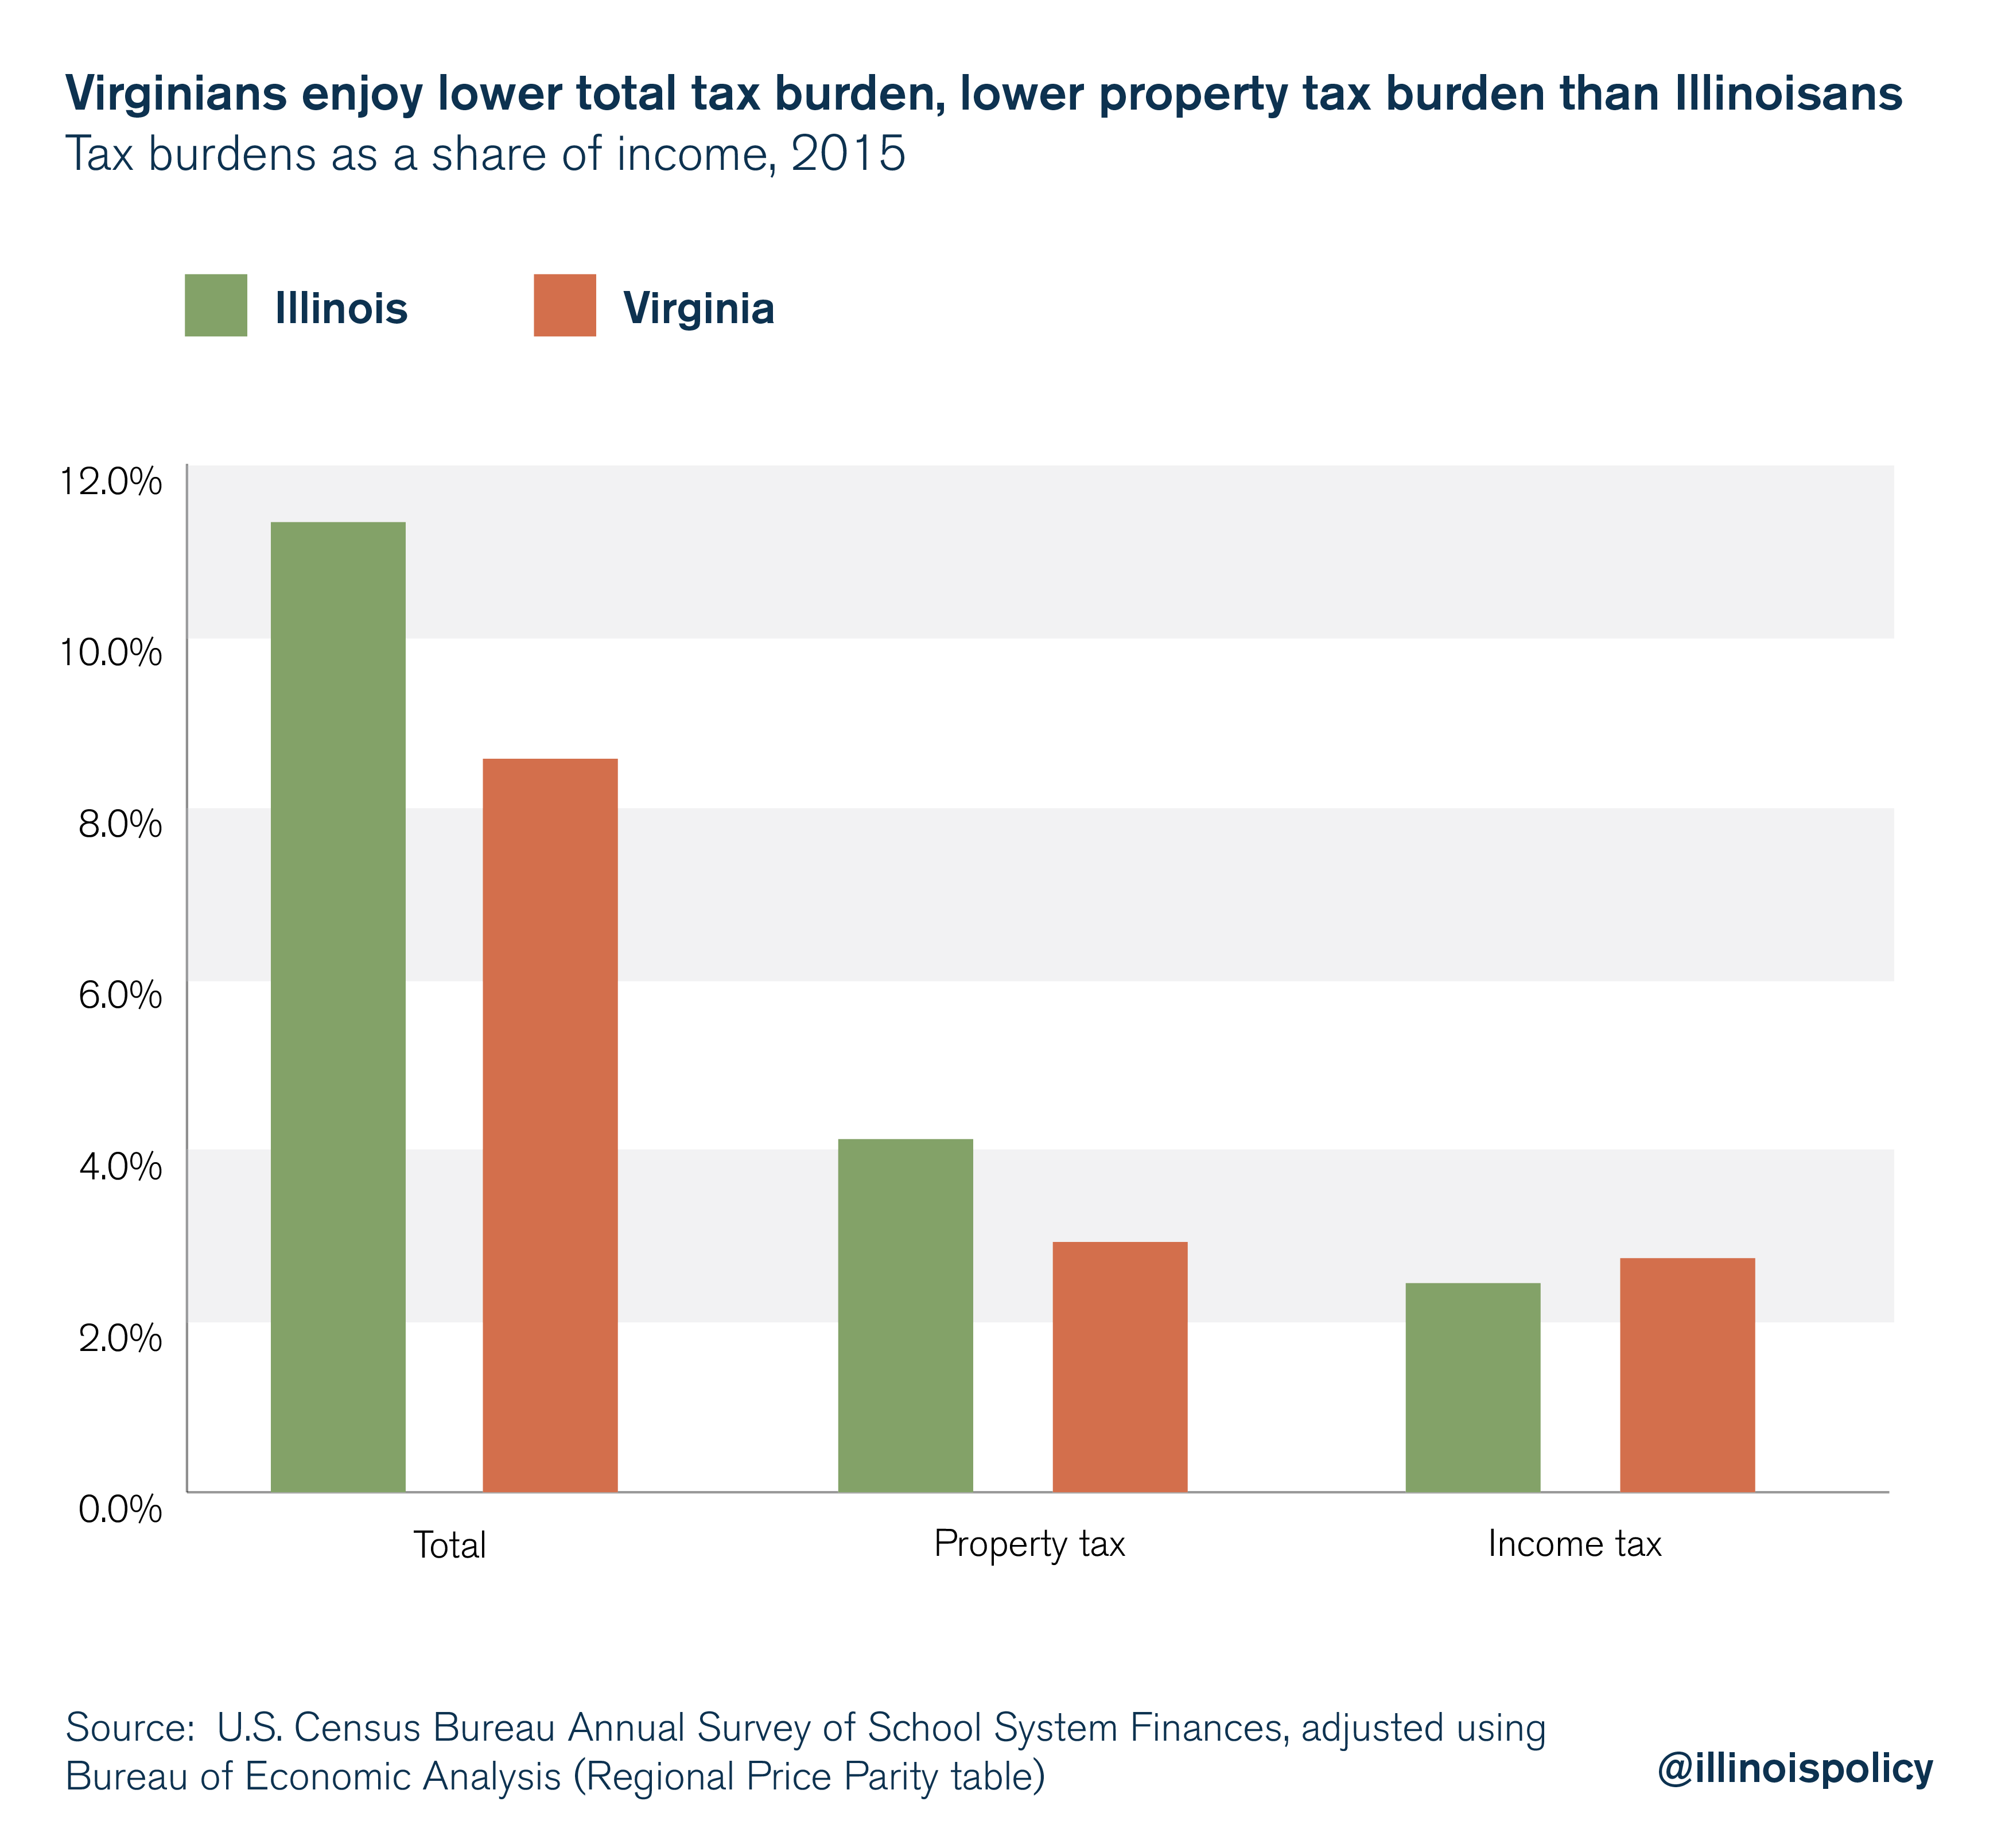 Virginians enjoy lower total tax burden, lower property tax burden than Illinoisans